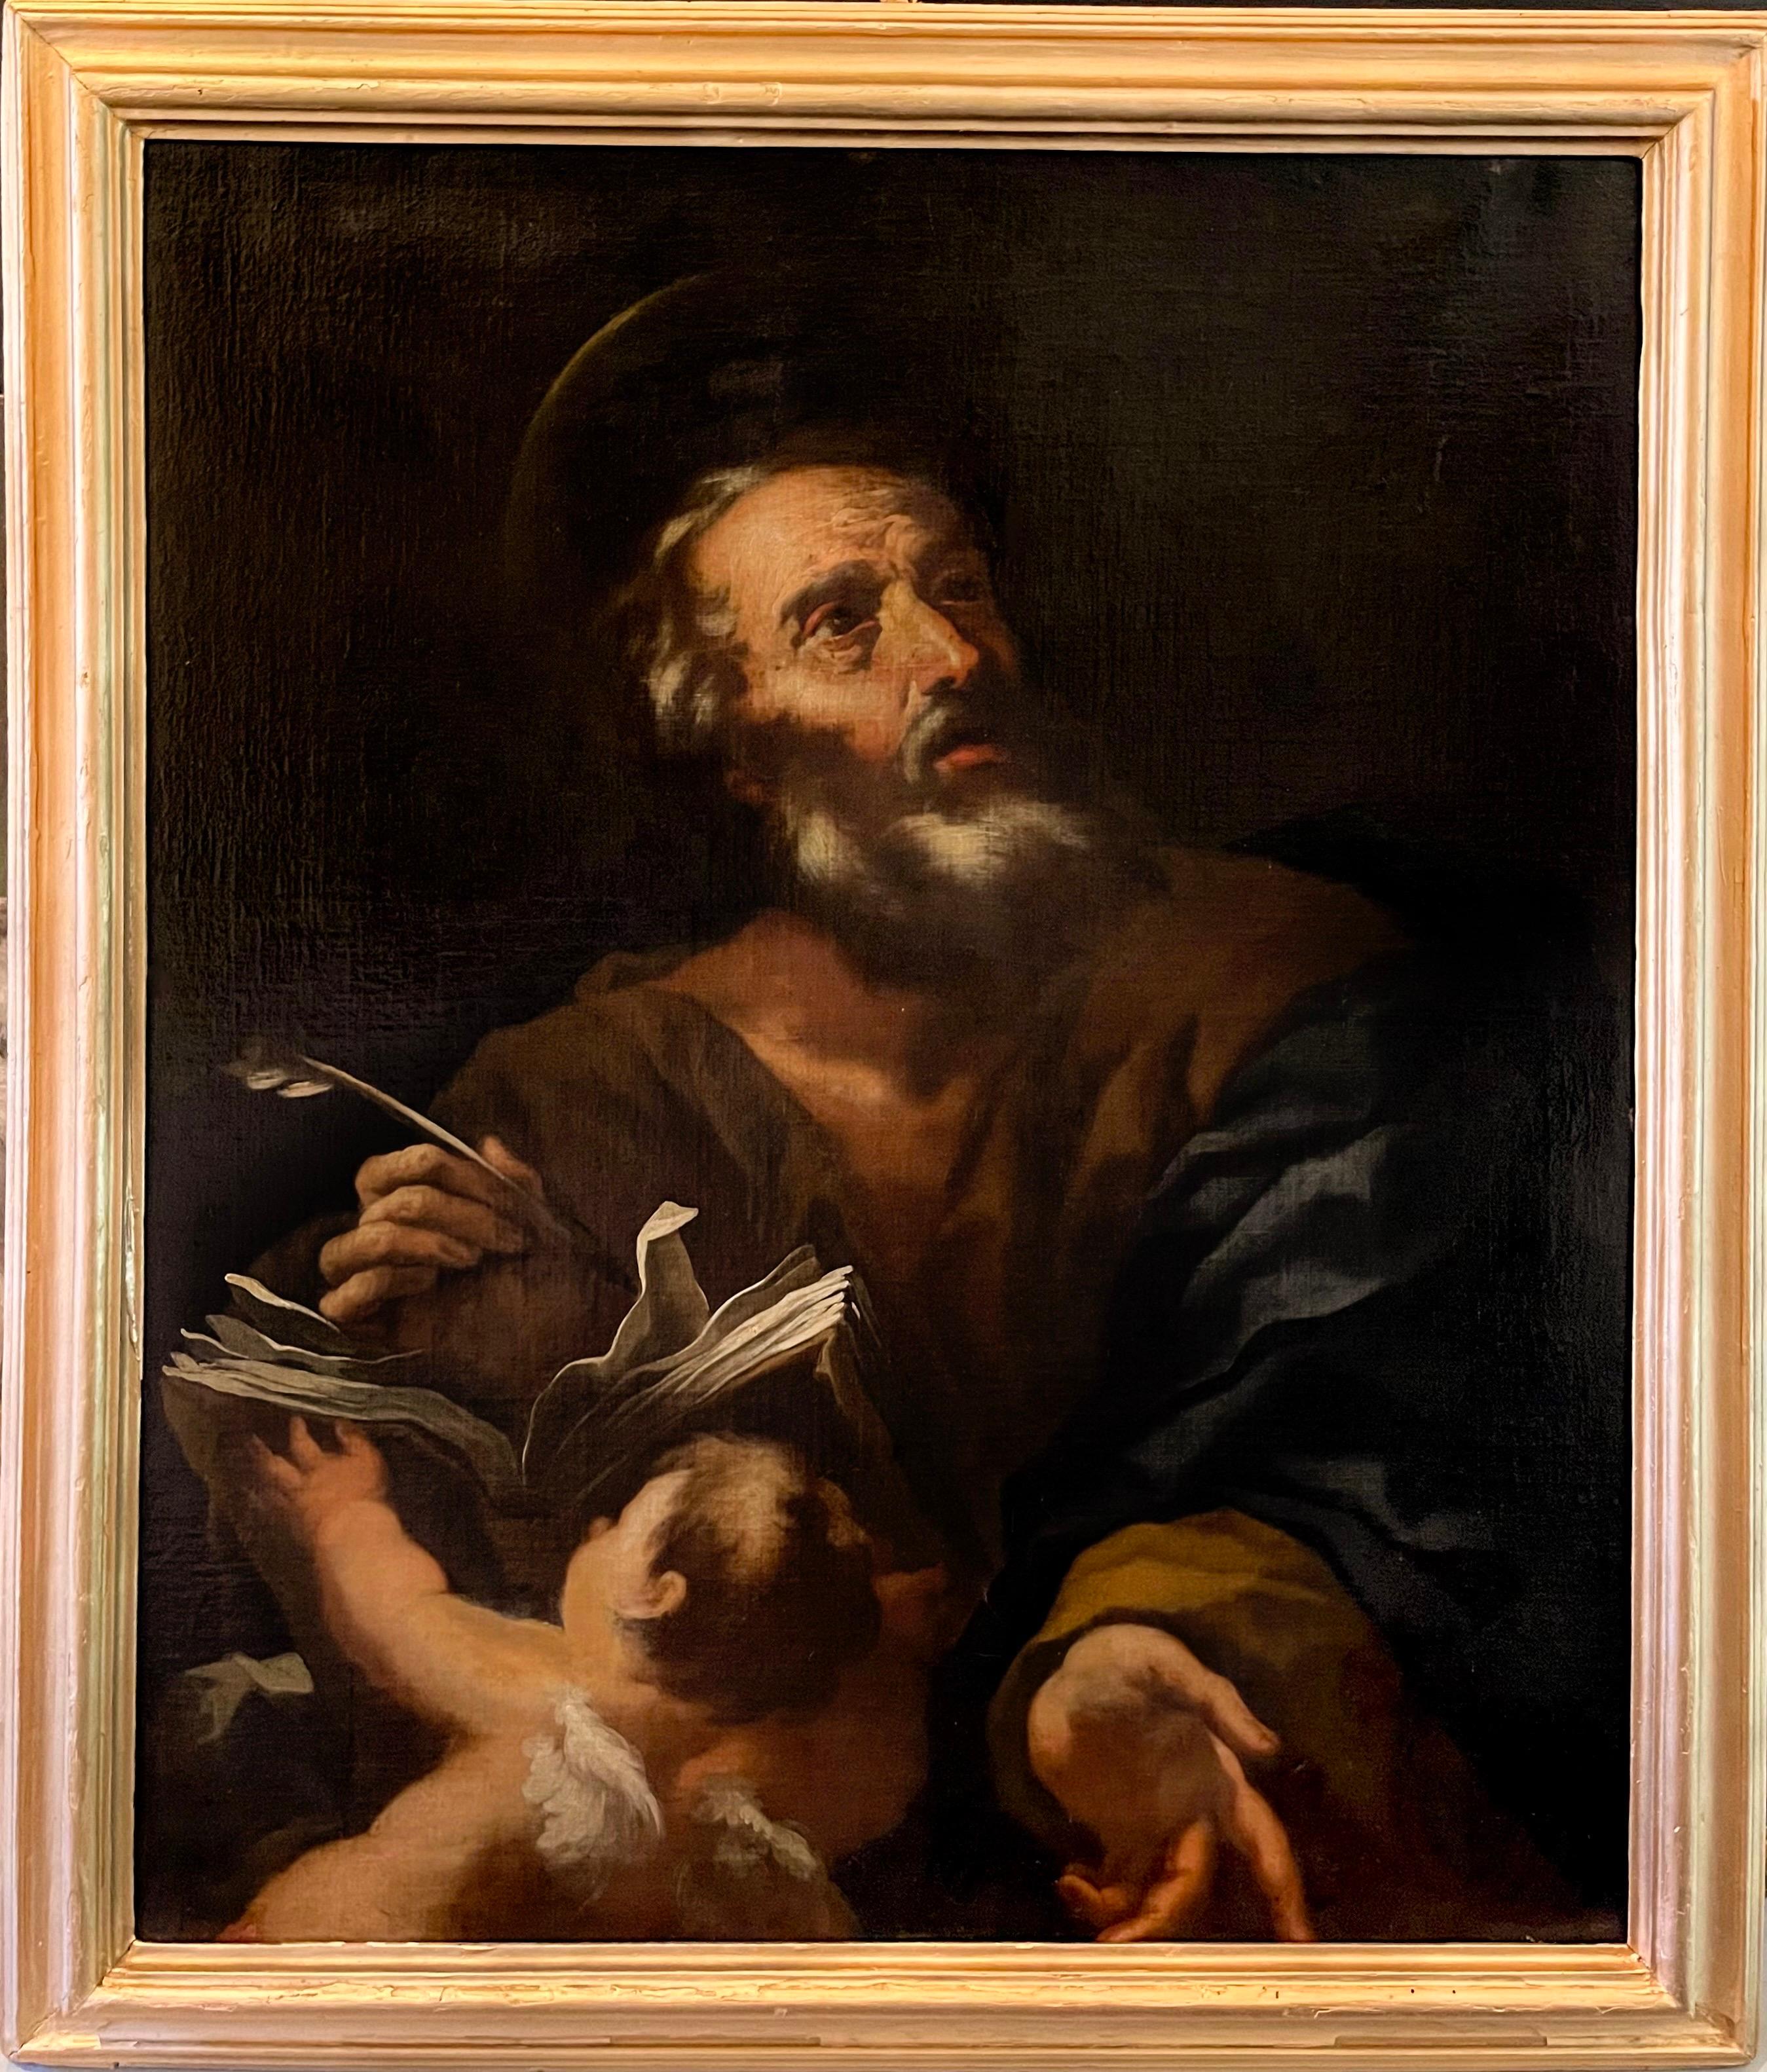 Luca Giordano (follower of) Figurative Painting - 17th century Italian Old Master painting - Saint Paul - Angel Giordano